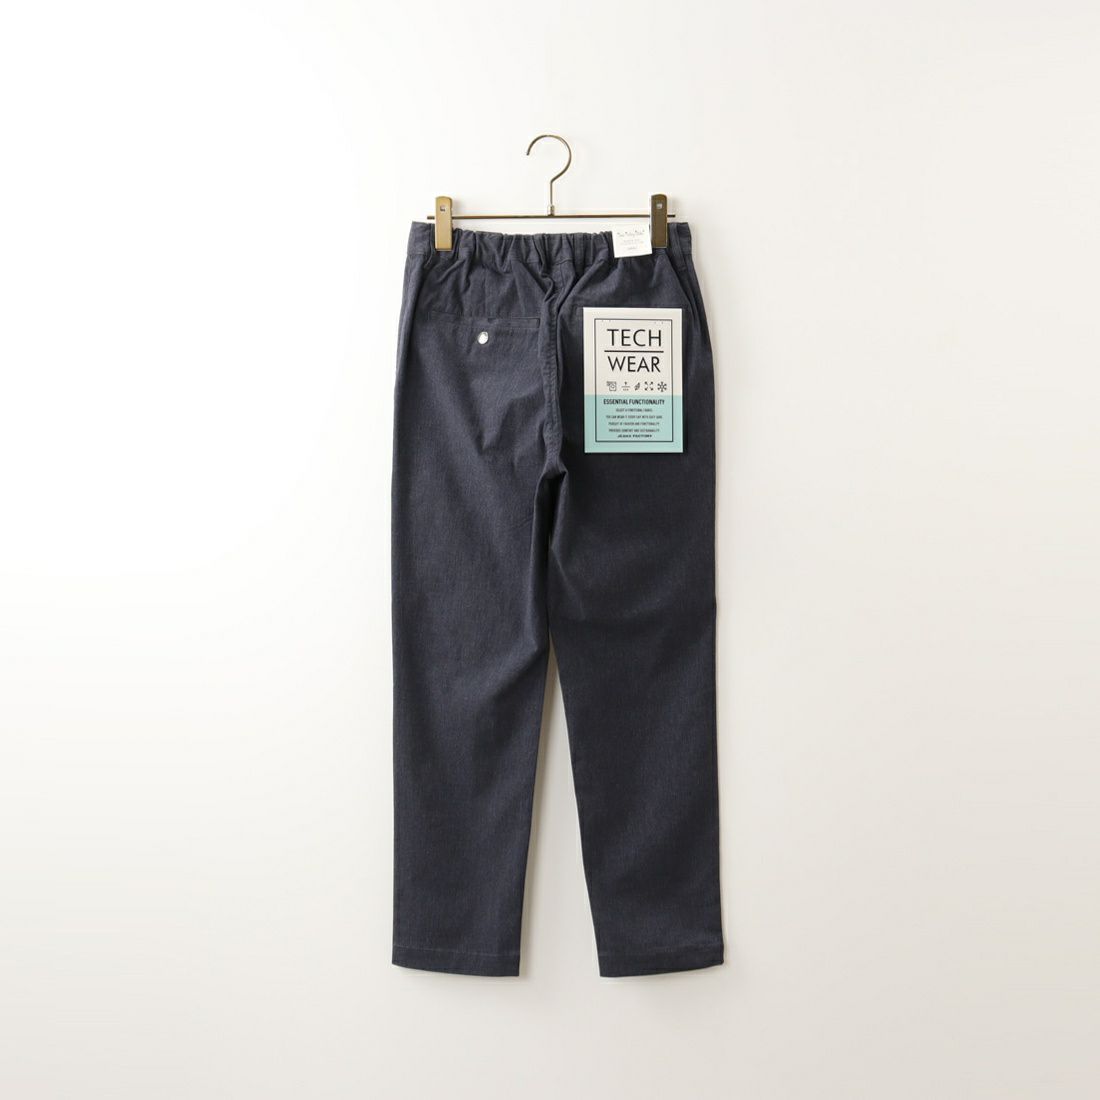 Jeans Factory Clothes [ジーンズファクトリークローズ] ストレッチアンクルトラウザー [JFC-232-030] 02 NVY